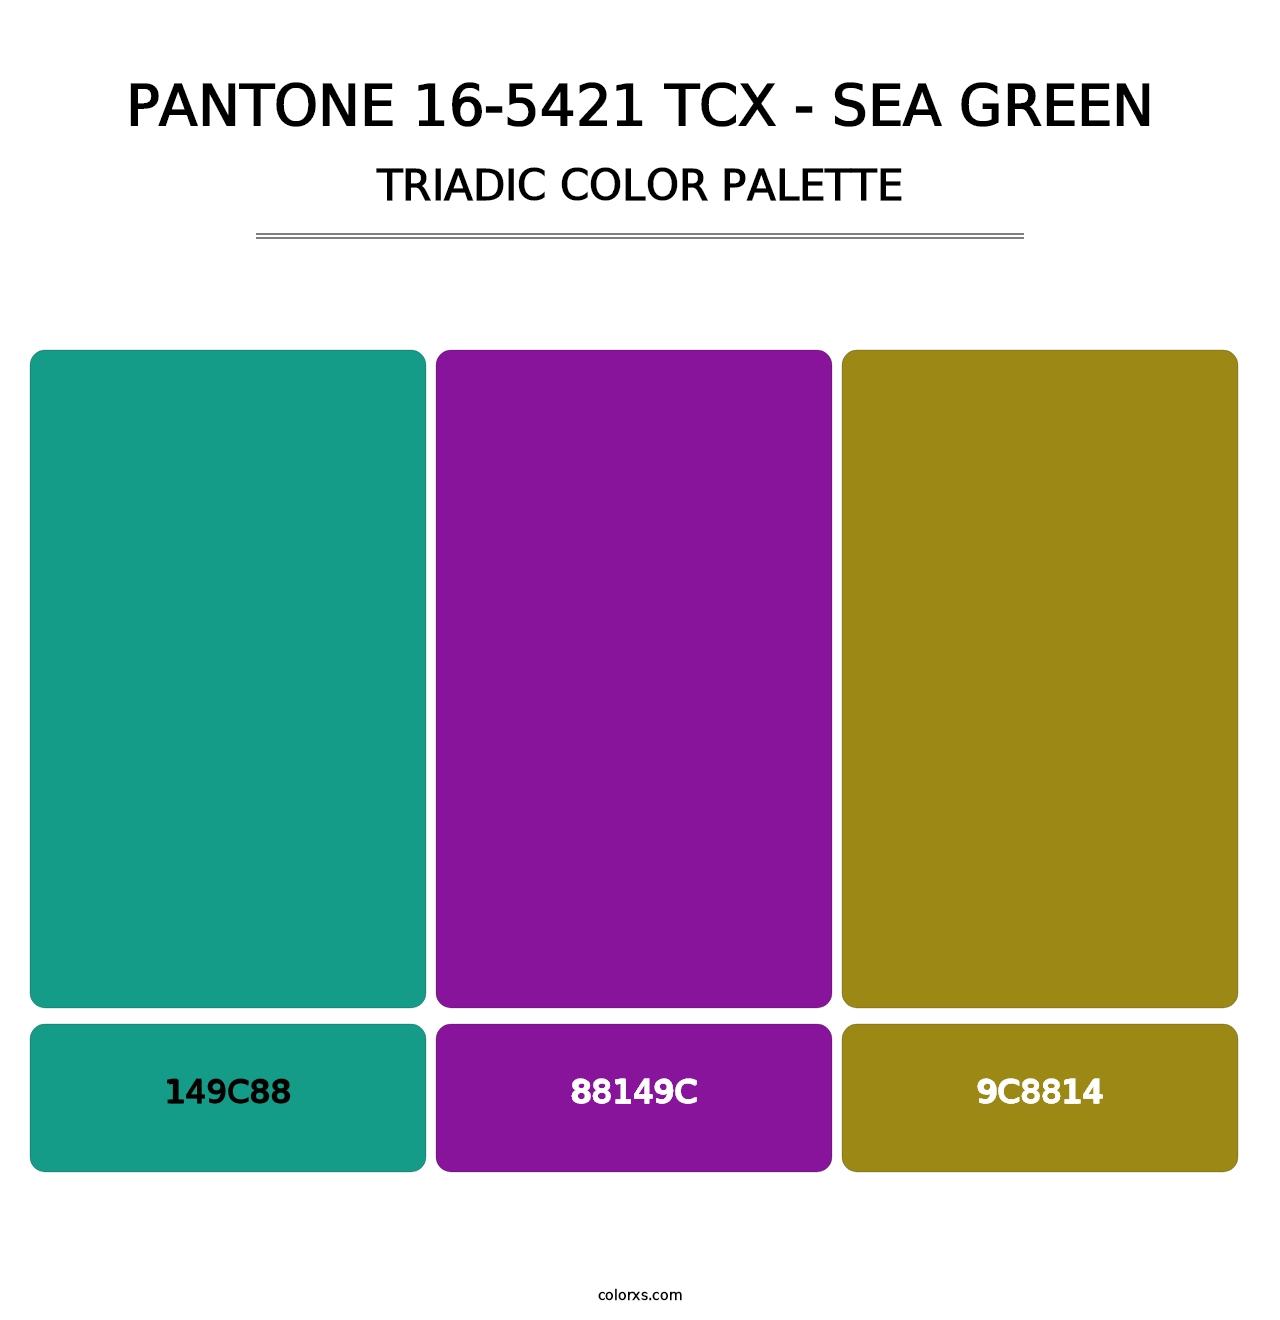 PANTONE 16-5421 TCX - Sea Green - Triadic Color Palette